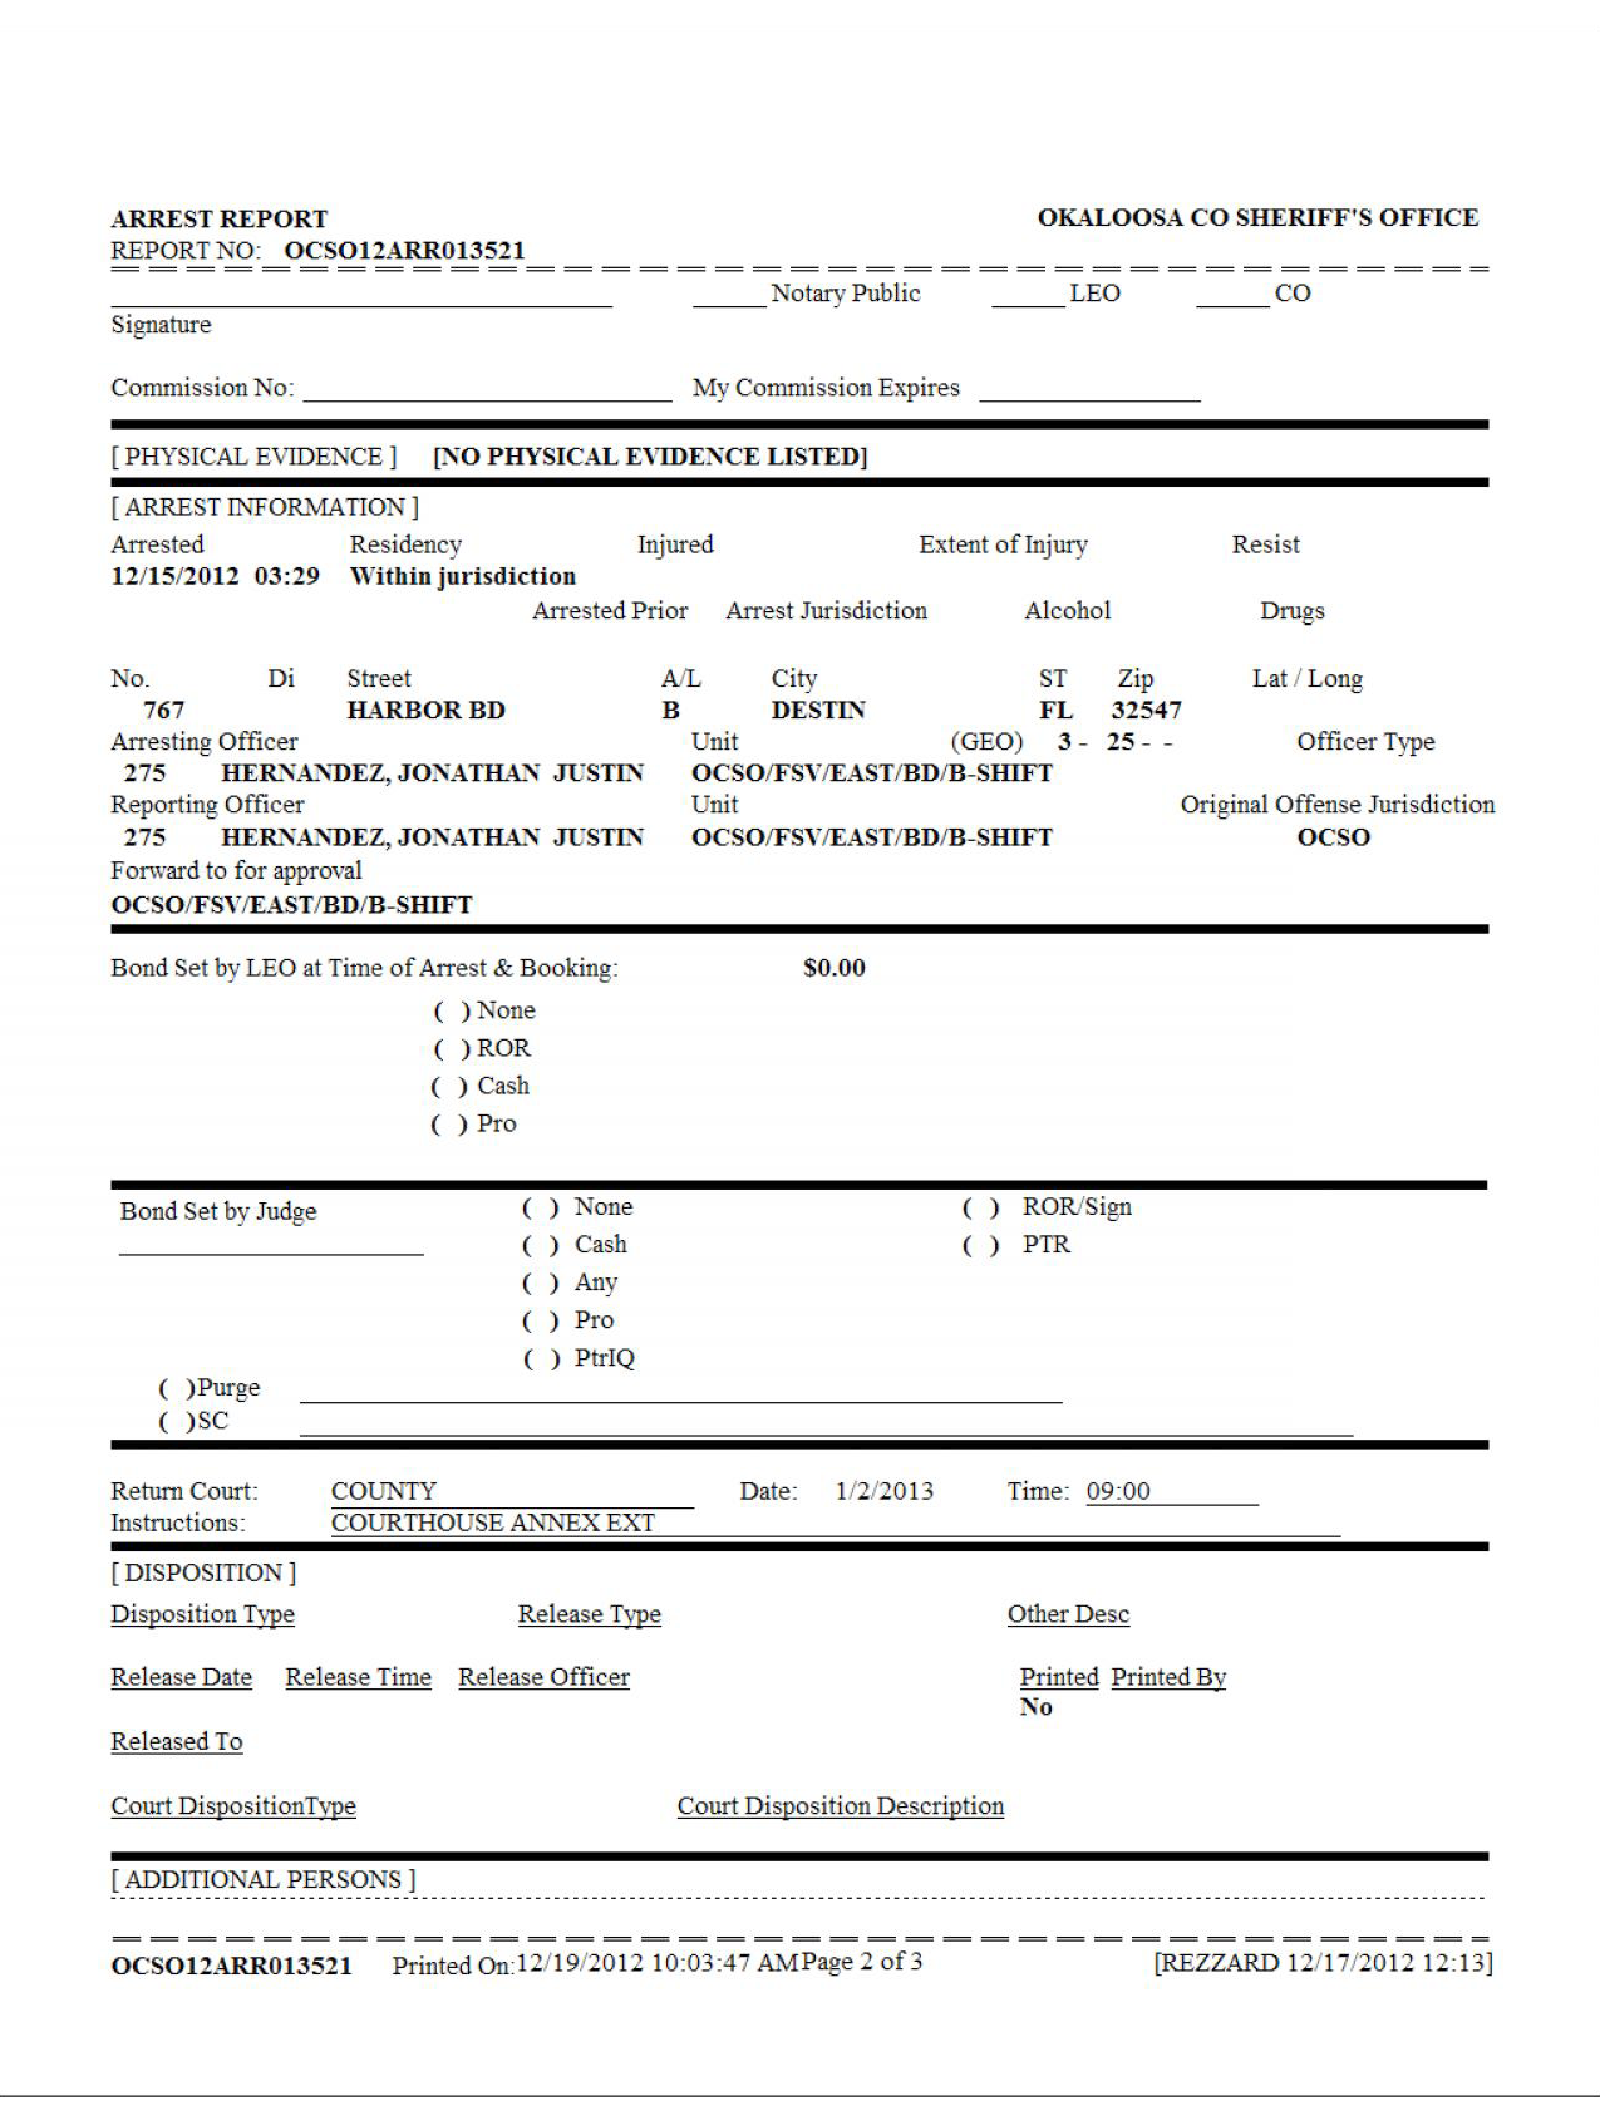 Copy of bowman brittne arrest report2.png